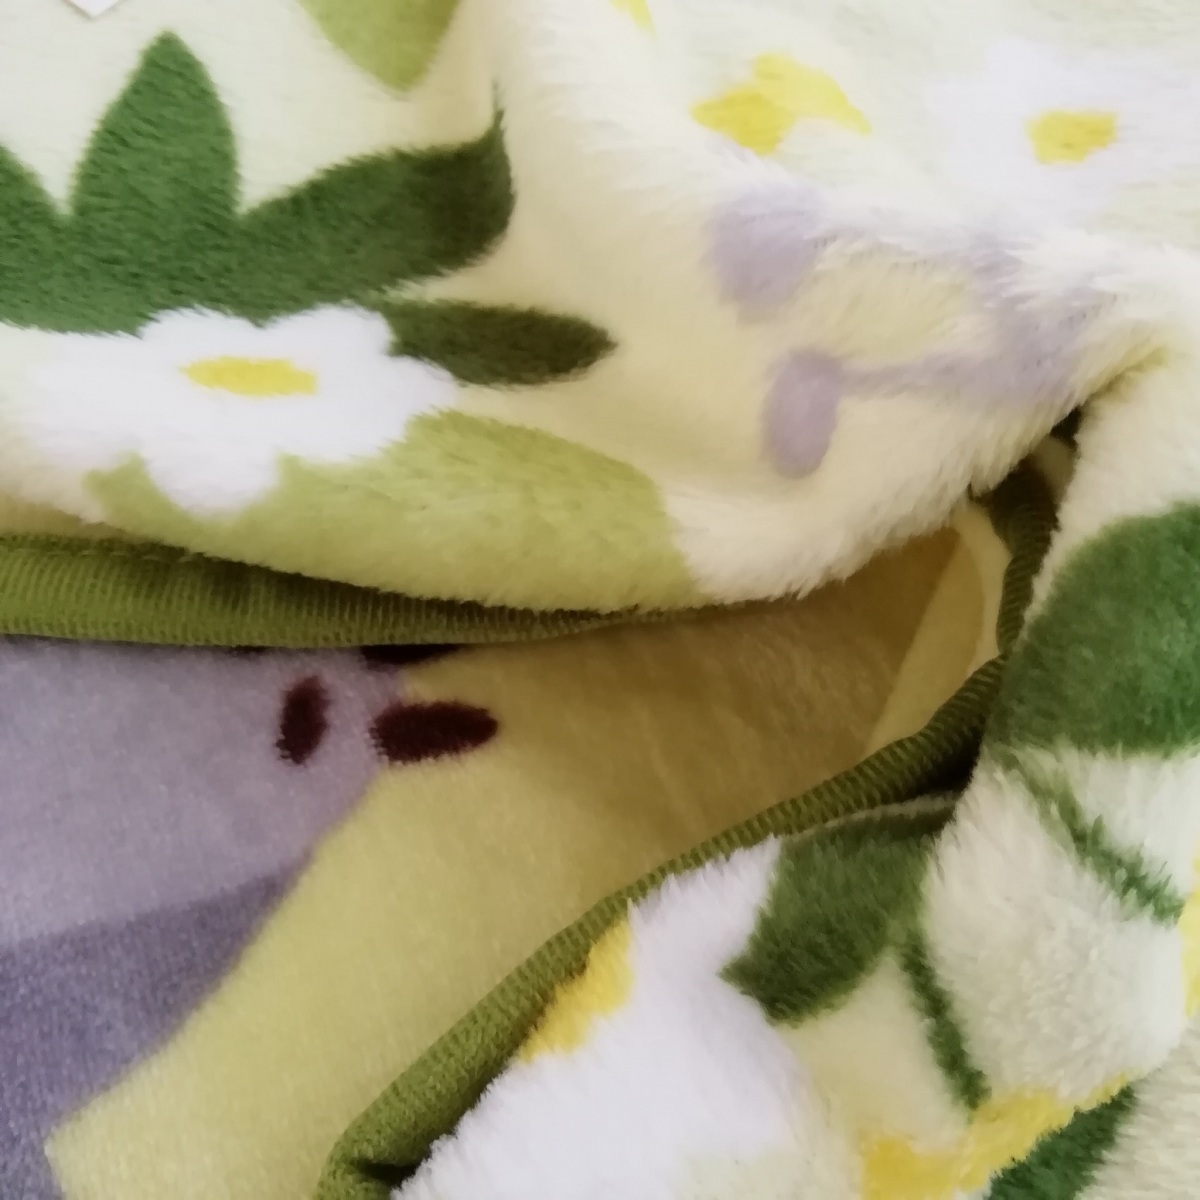  Marushin Ghibli Tonari no Totoro покрывало на колени одеяло 80×150cm длинный размер весна. . дуть 